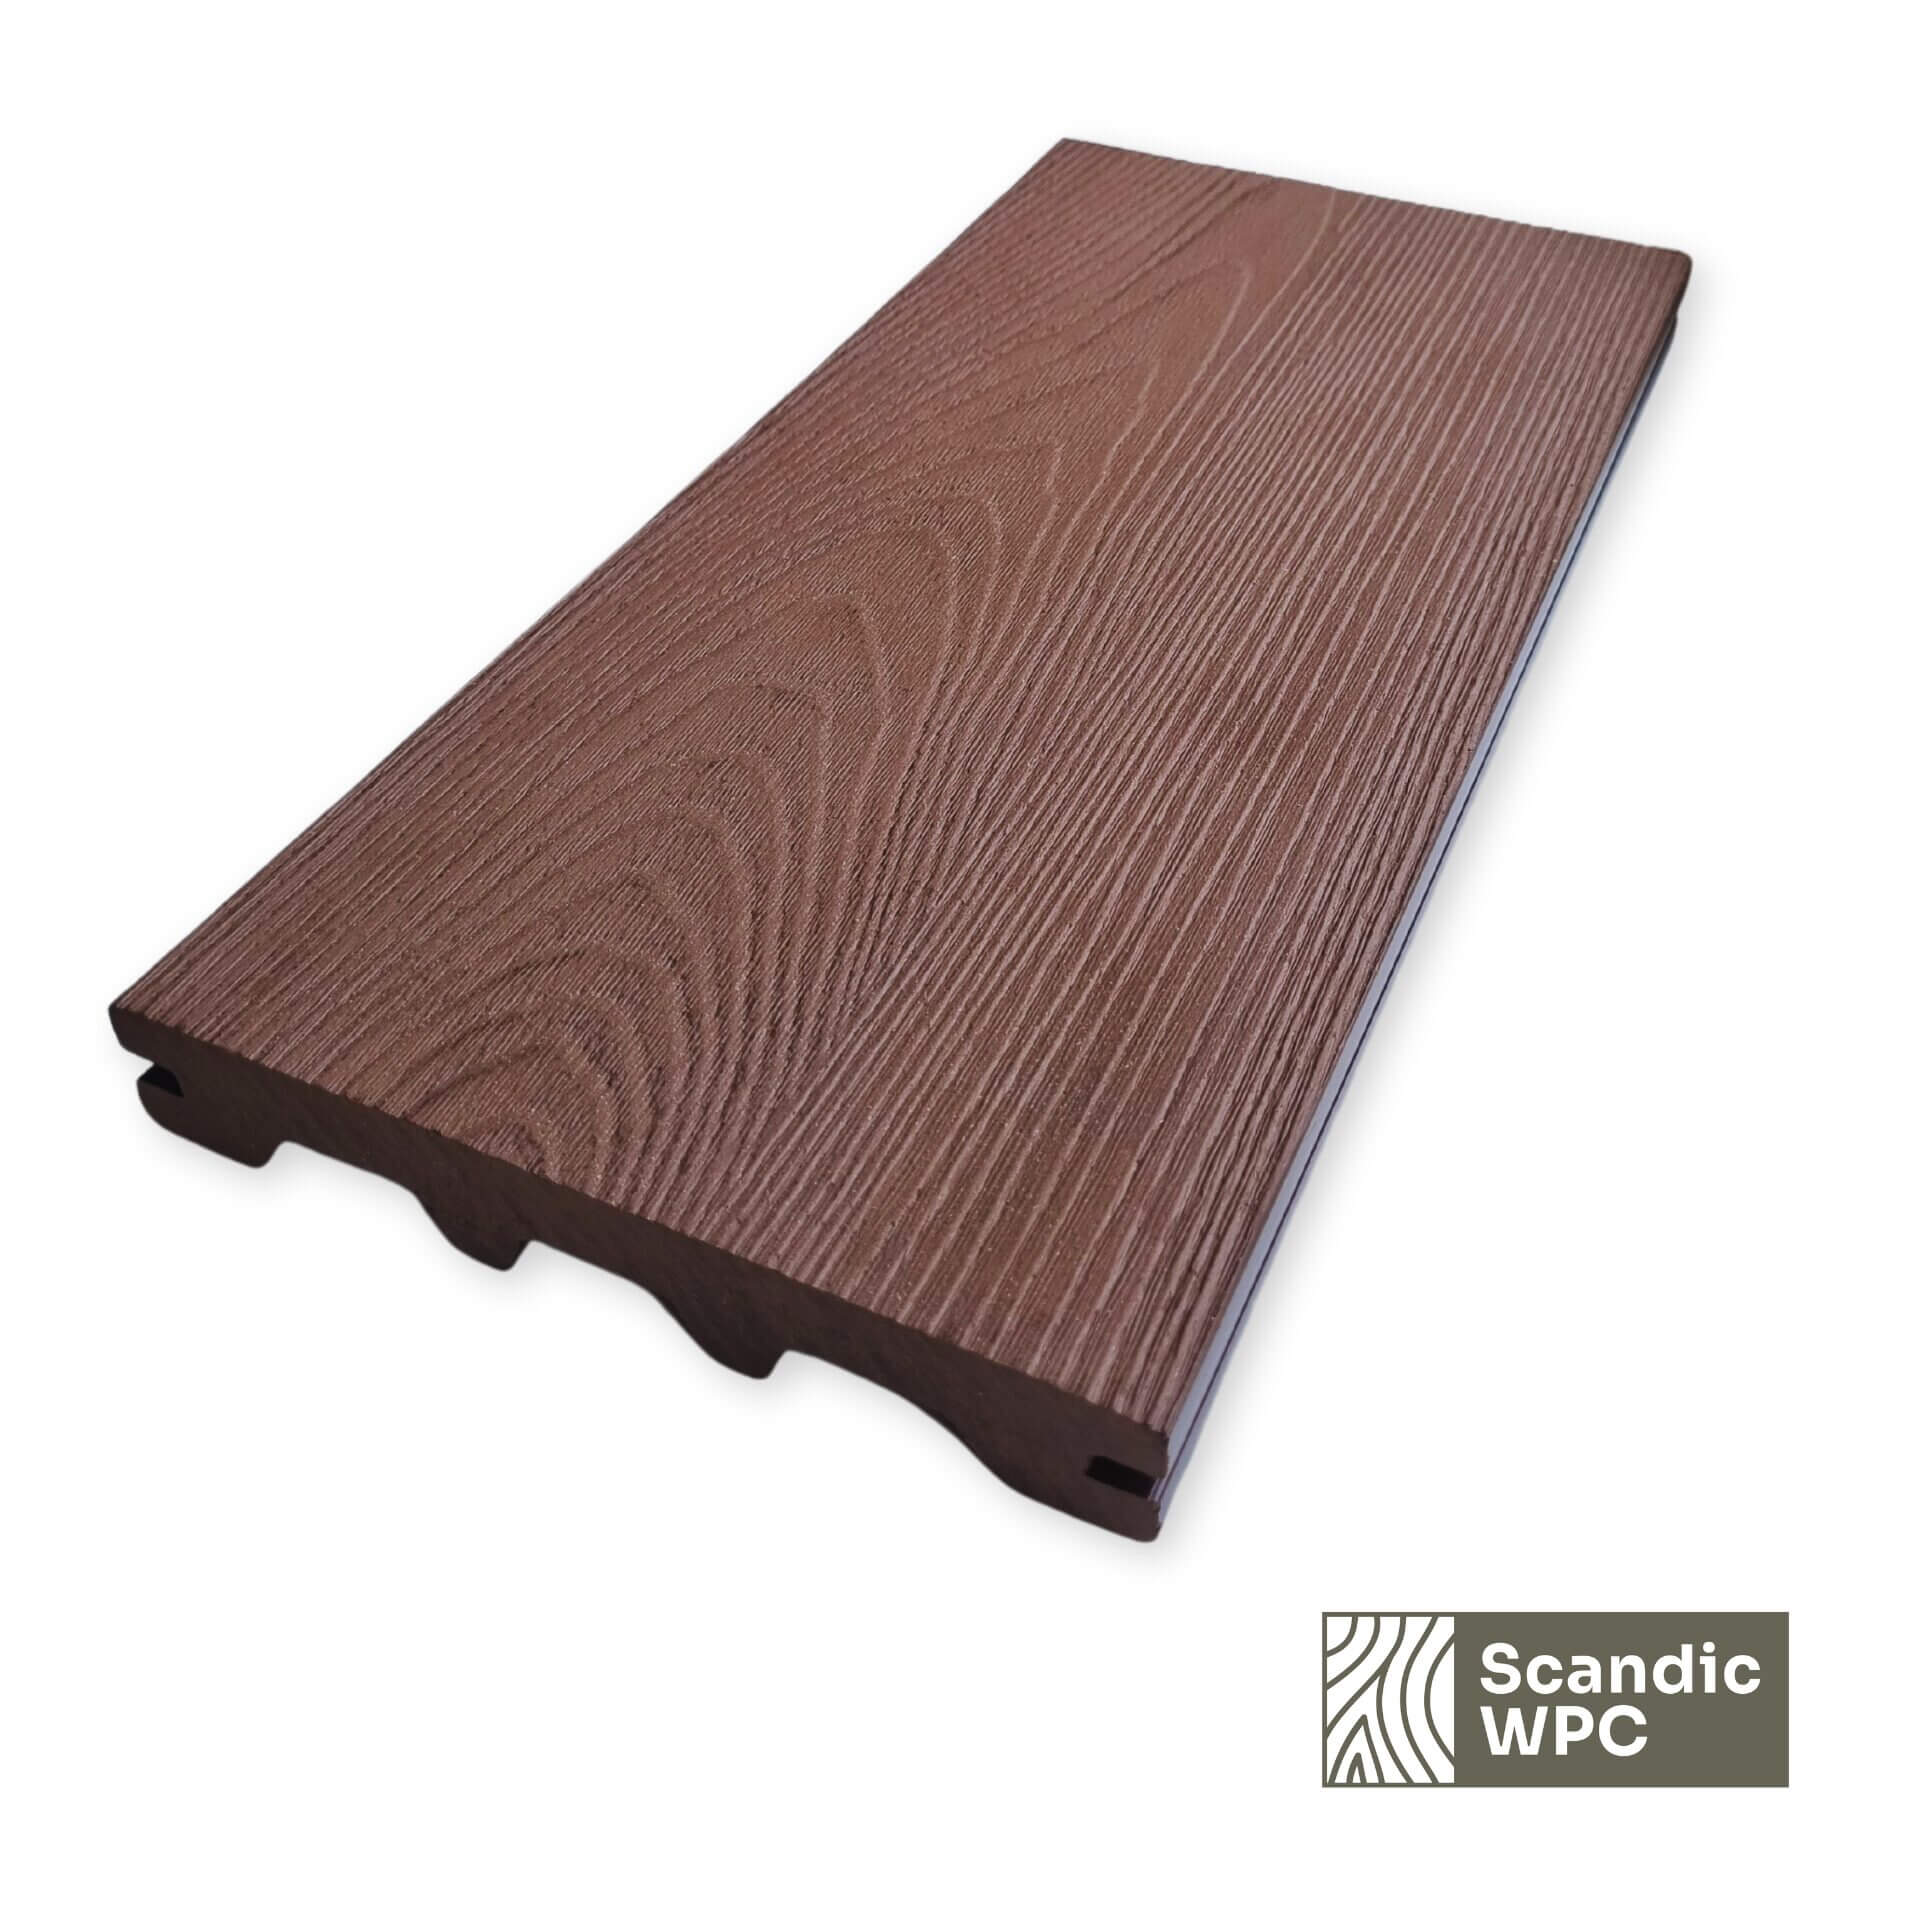 scandic wpc wood brown (1)